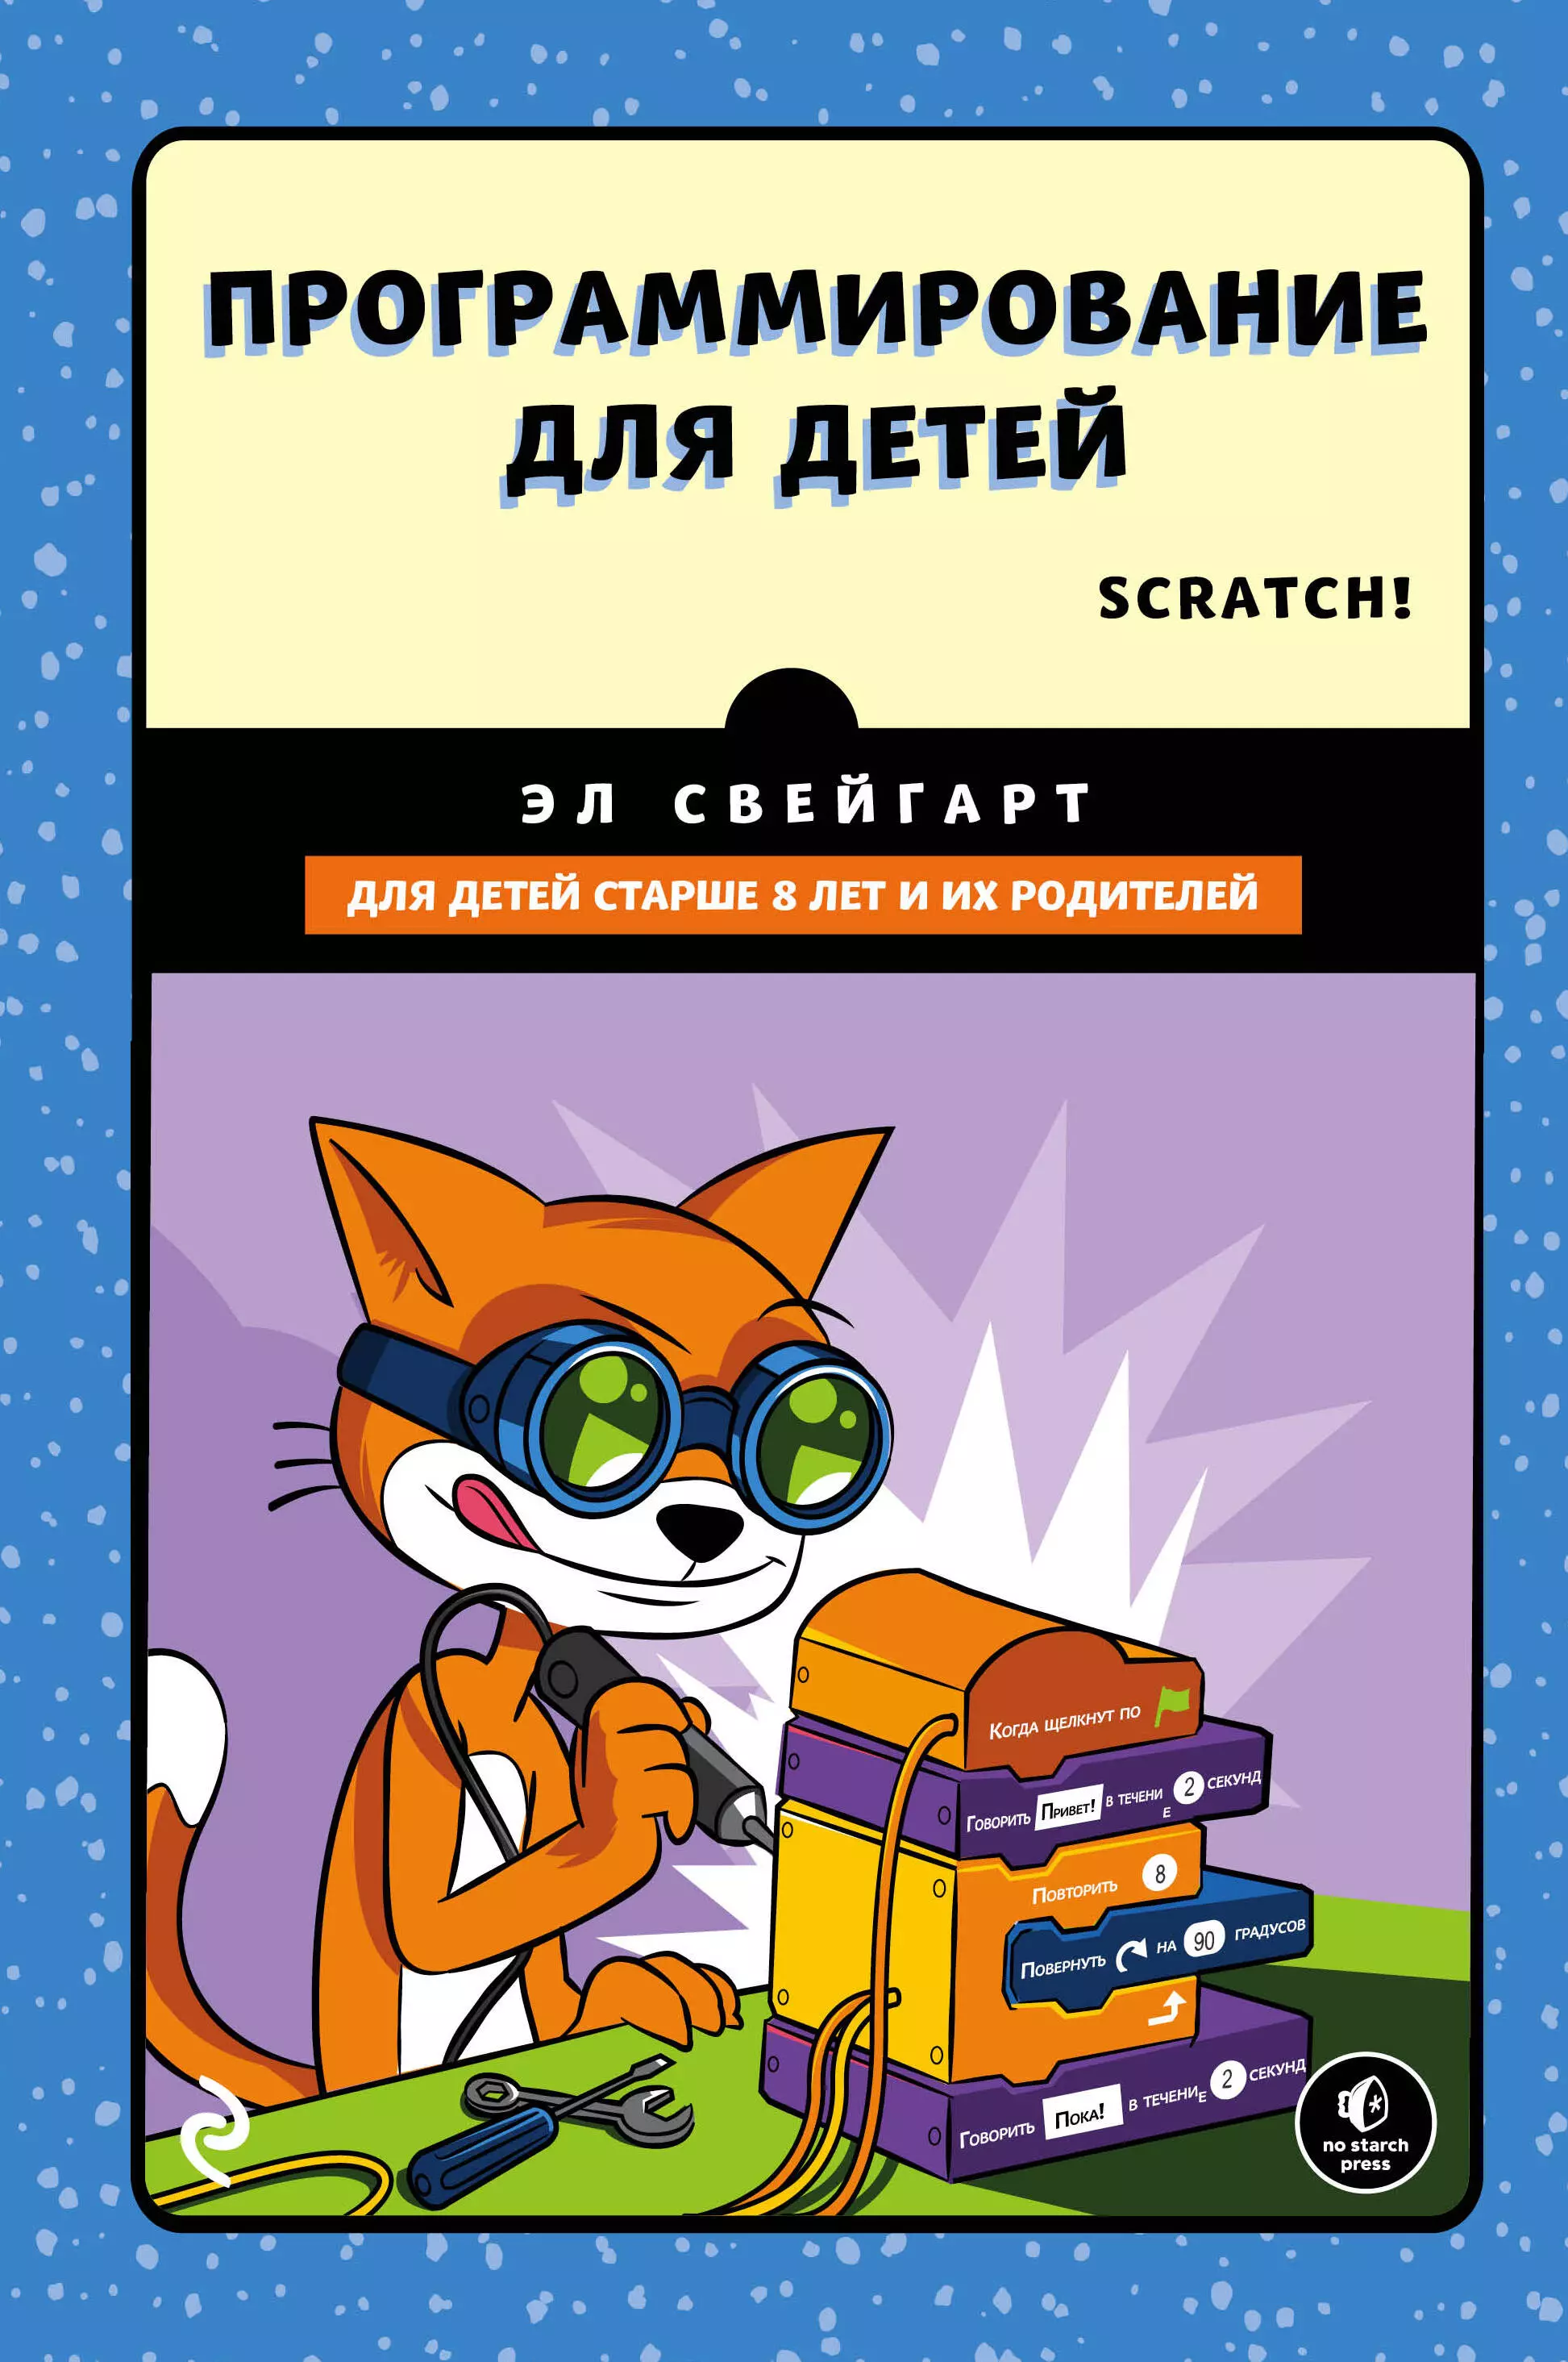 Книги про программирование. Scratch программирование для детей. Программирование для детей книга. Язык программирования с для детей книги. Игровое программирование для детей.